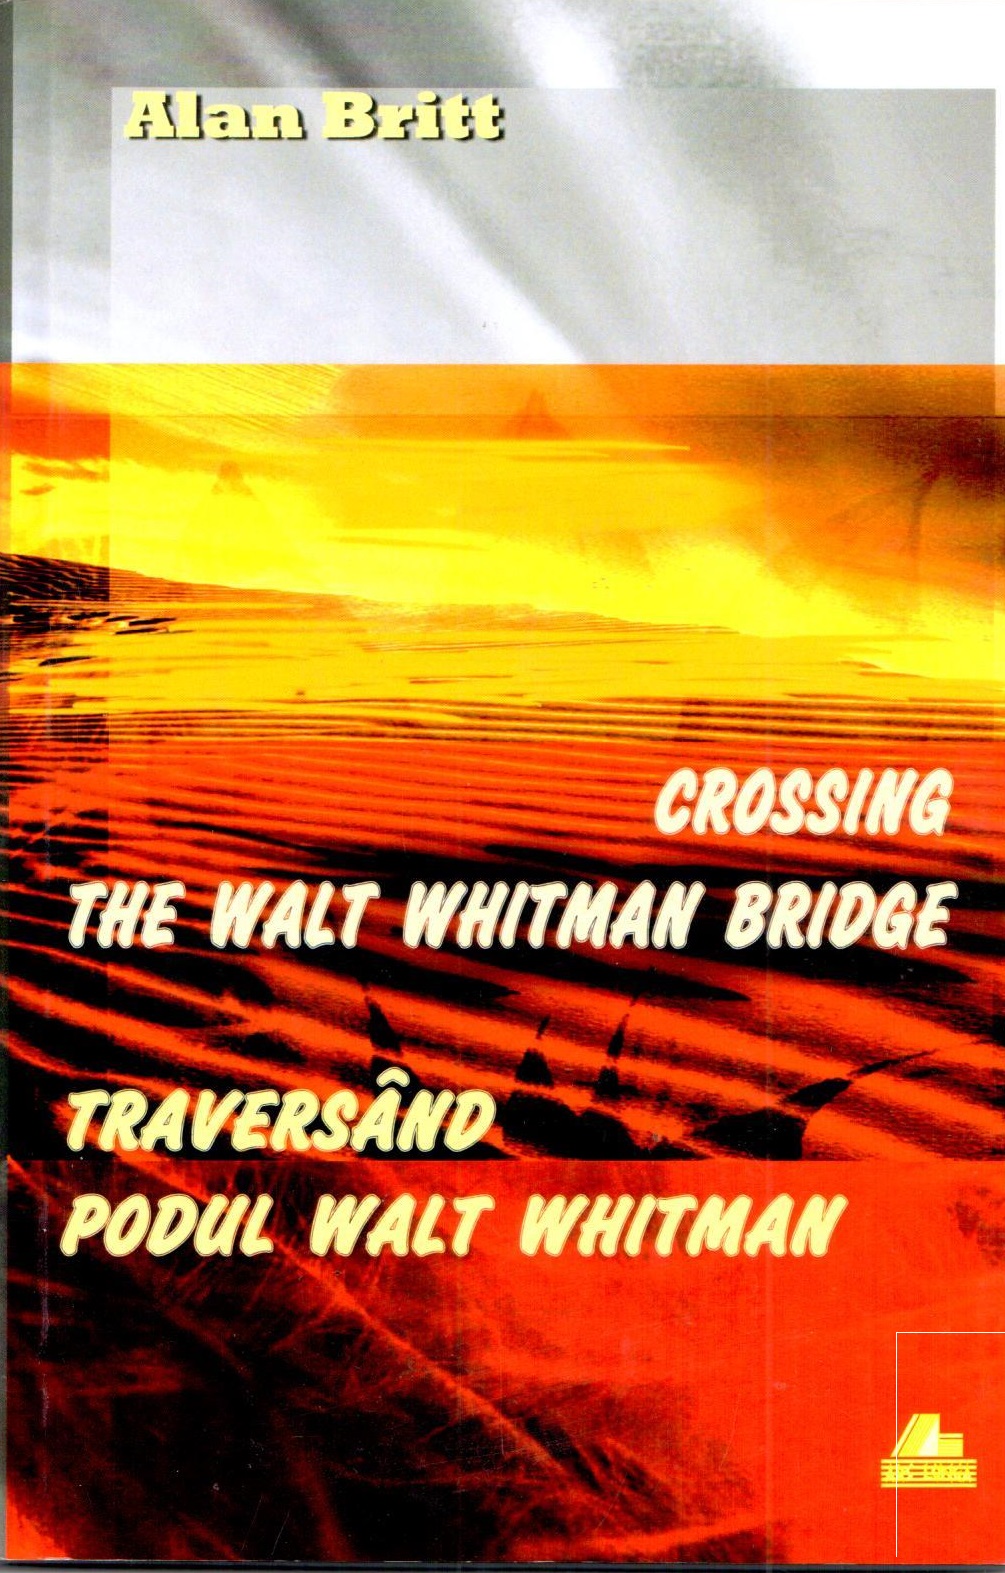 Crossing the Walt Whitman Bridge - Traversand podul Walt Whitman